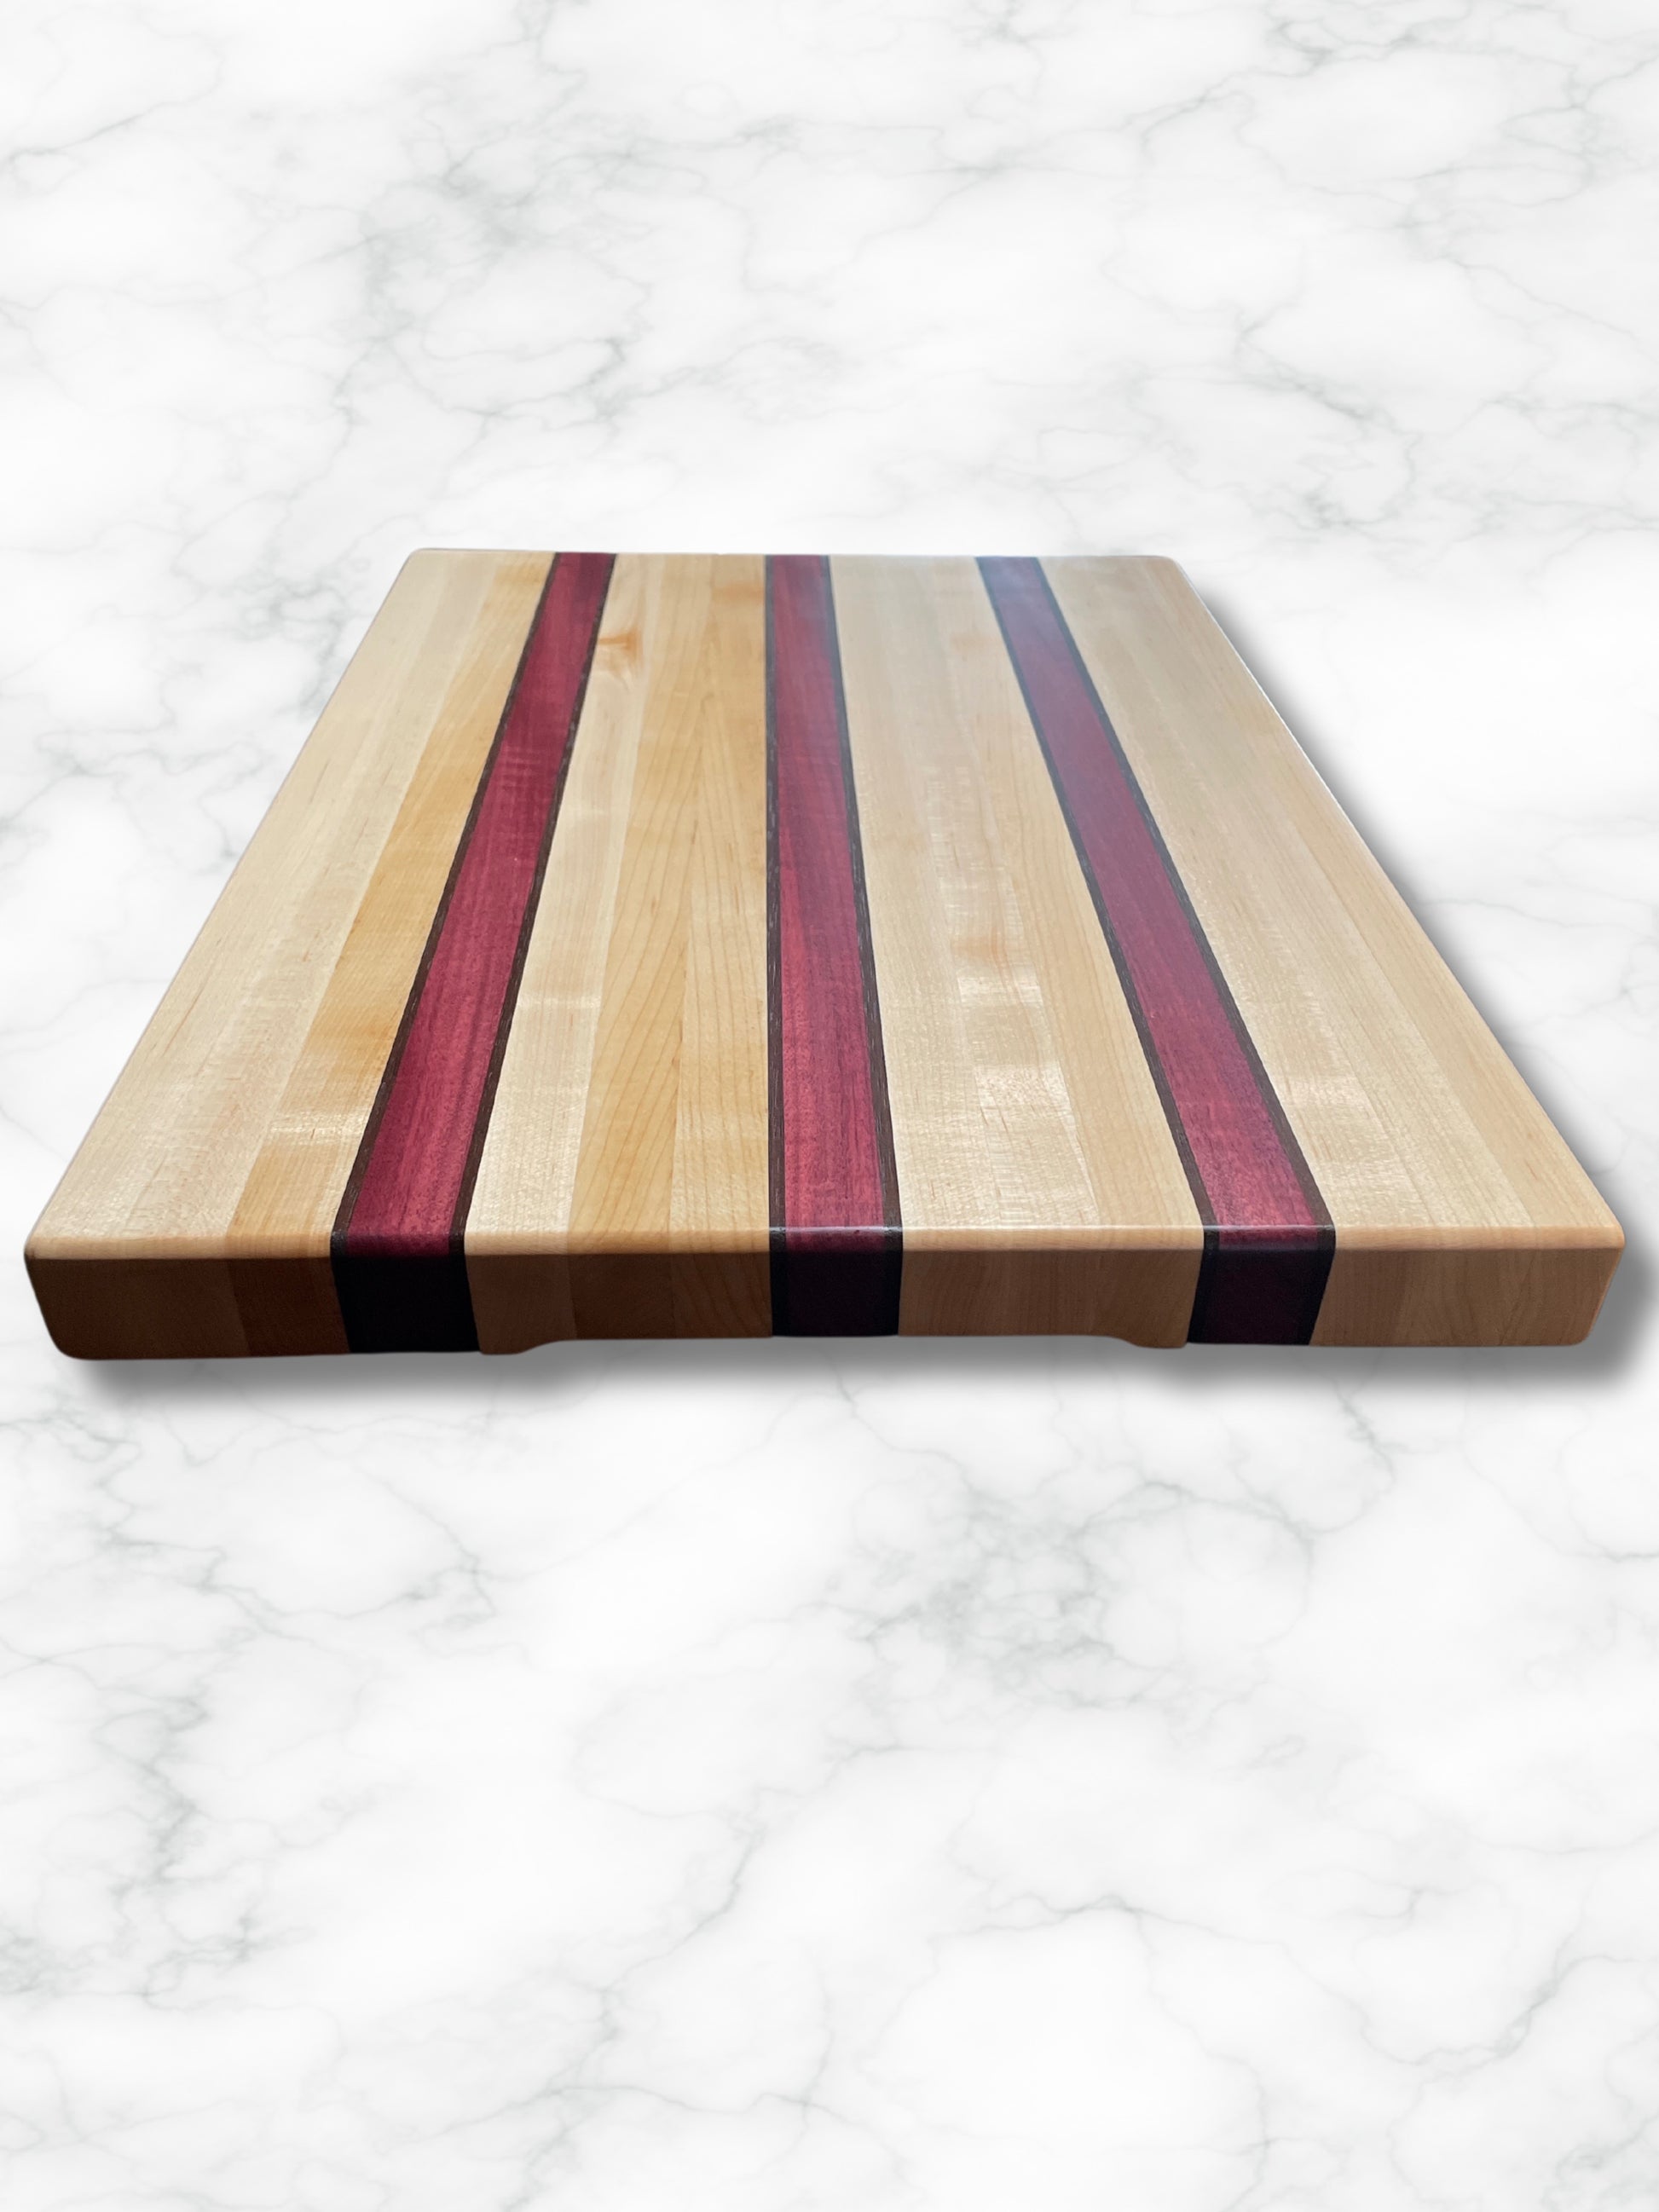 custom handmade edge grain maple purpleheart walnut wood cutting board, top view